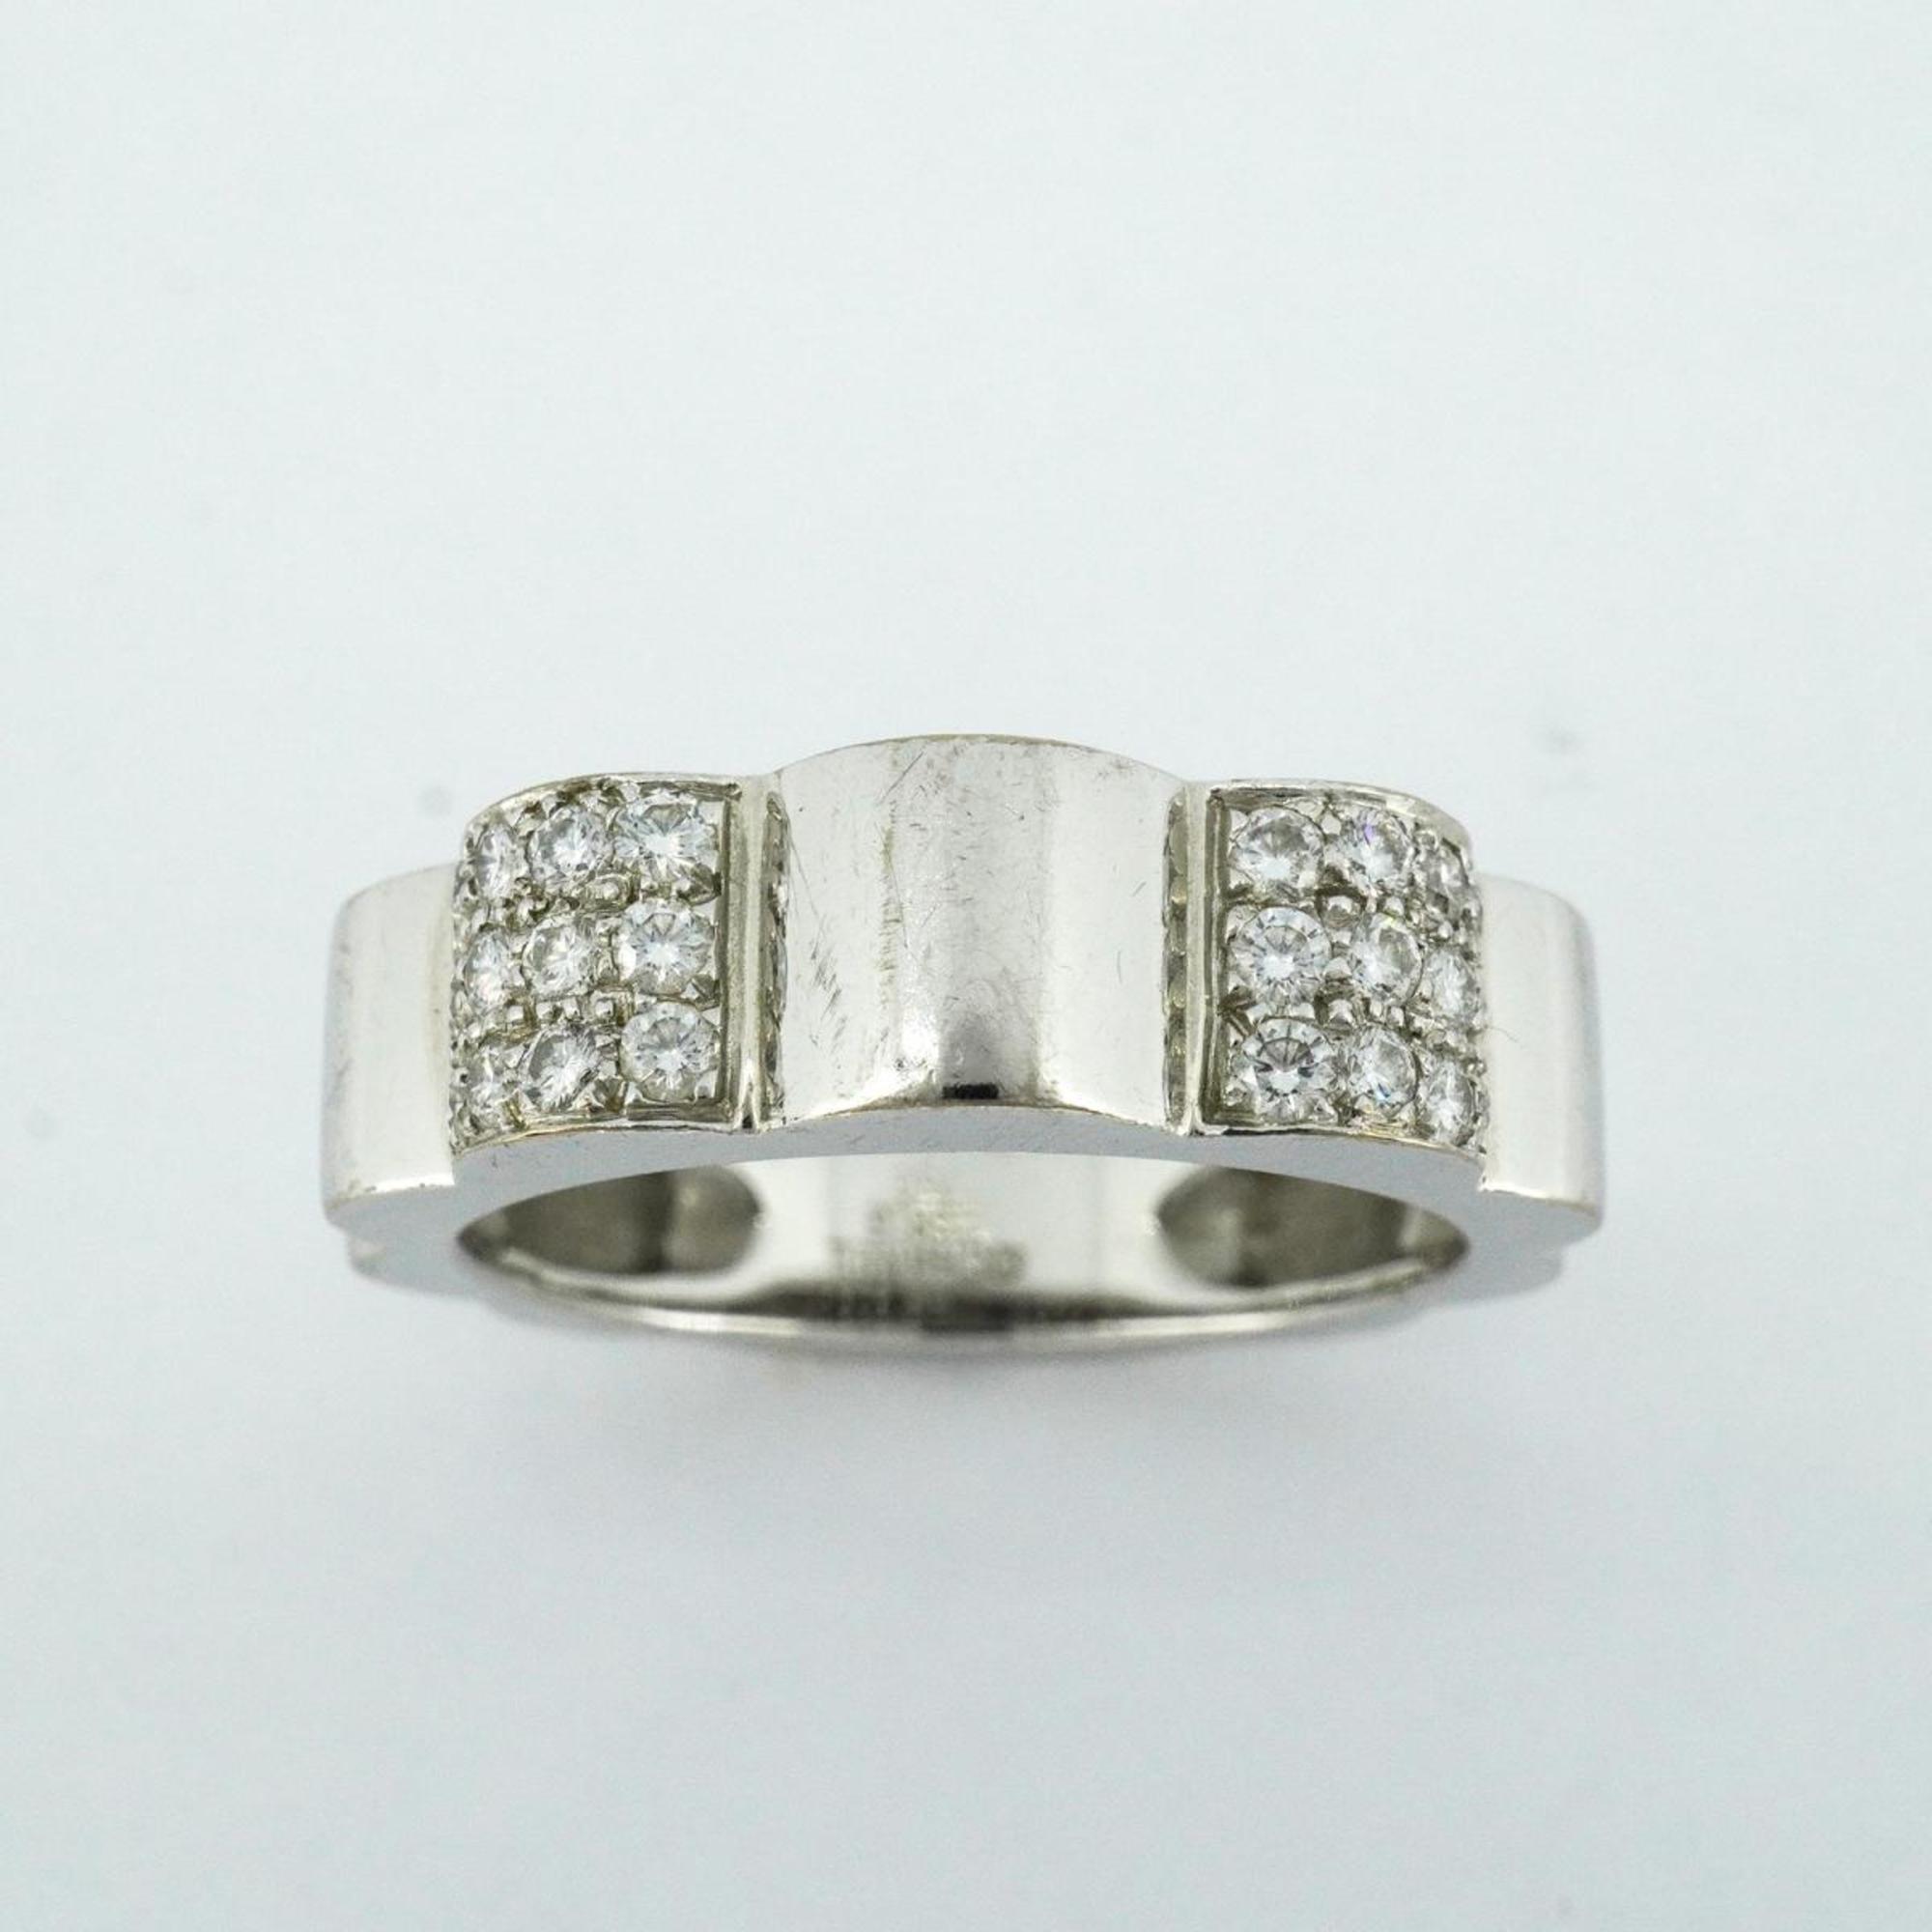 Chanel Ring Camellia Profield Diamond K18WG White Gold Women's